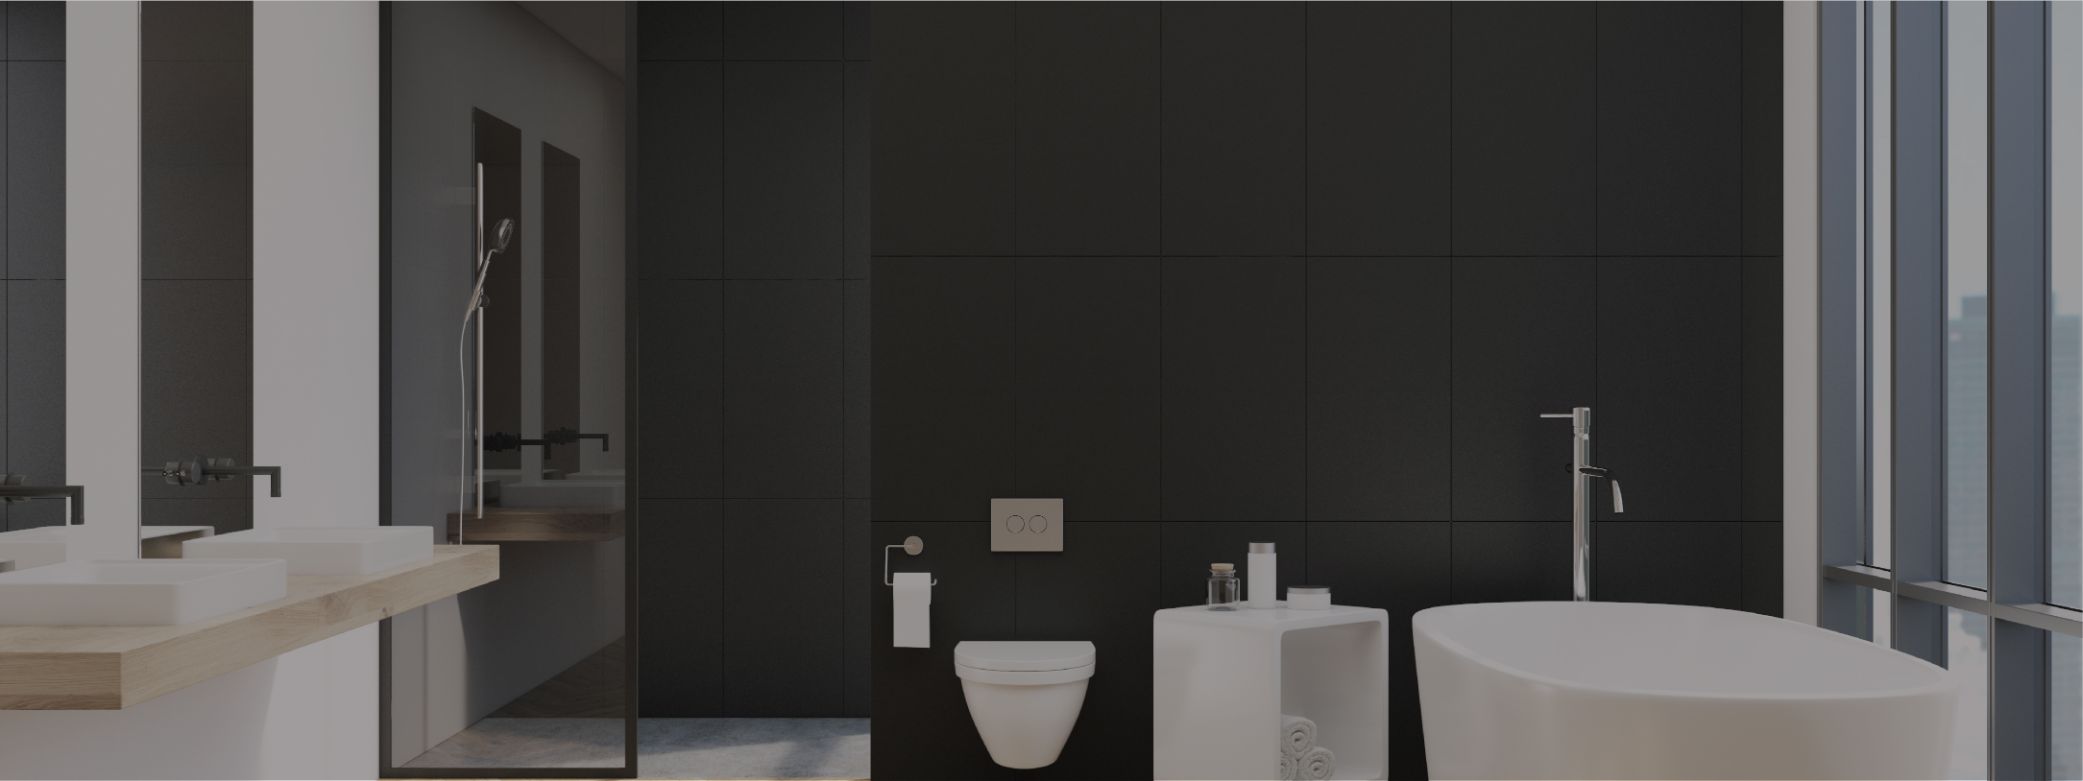 bathroom-pro-bathroom-remodeling-hero-image